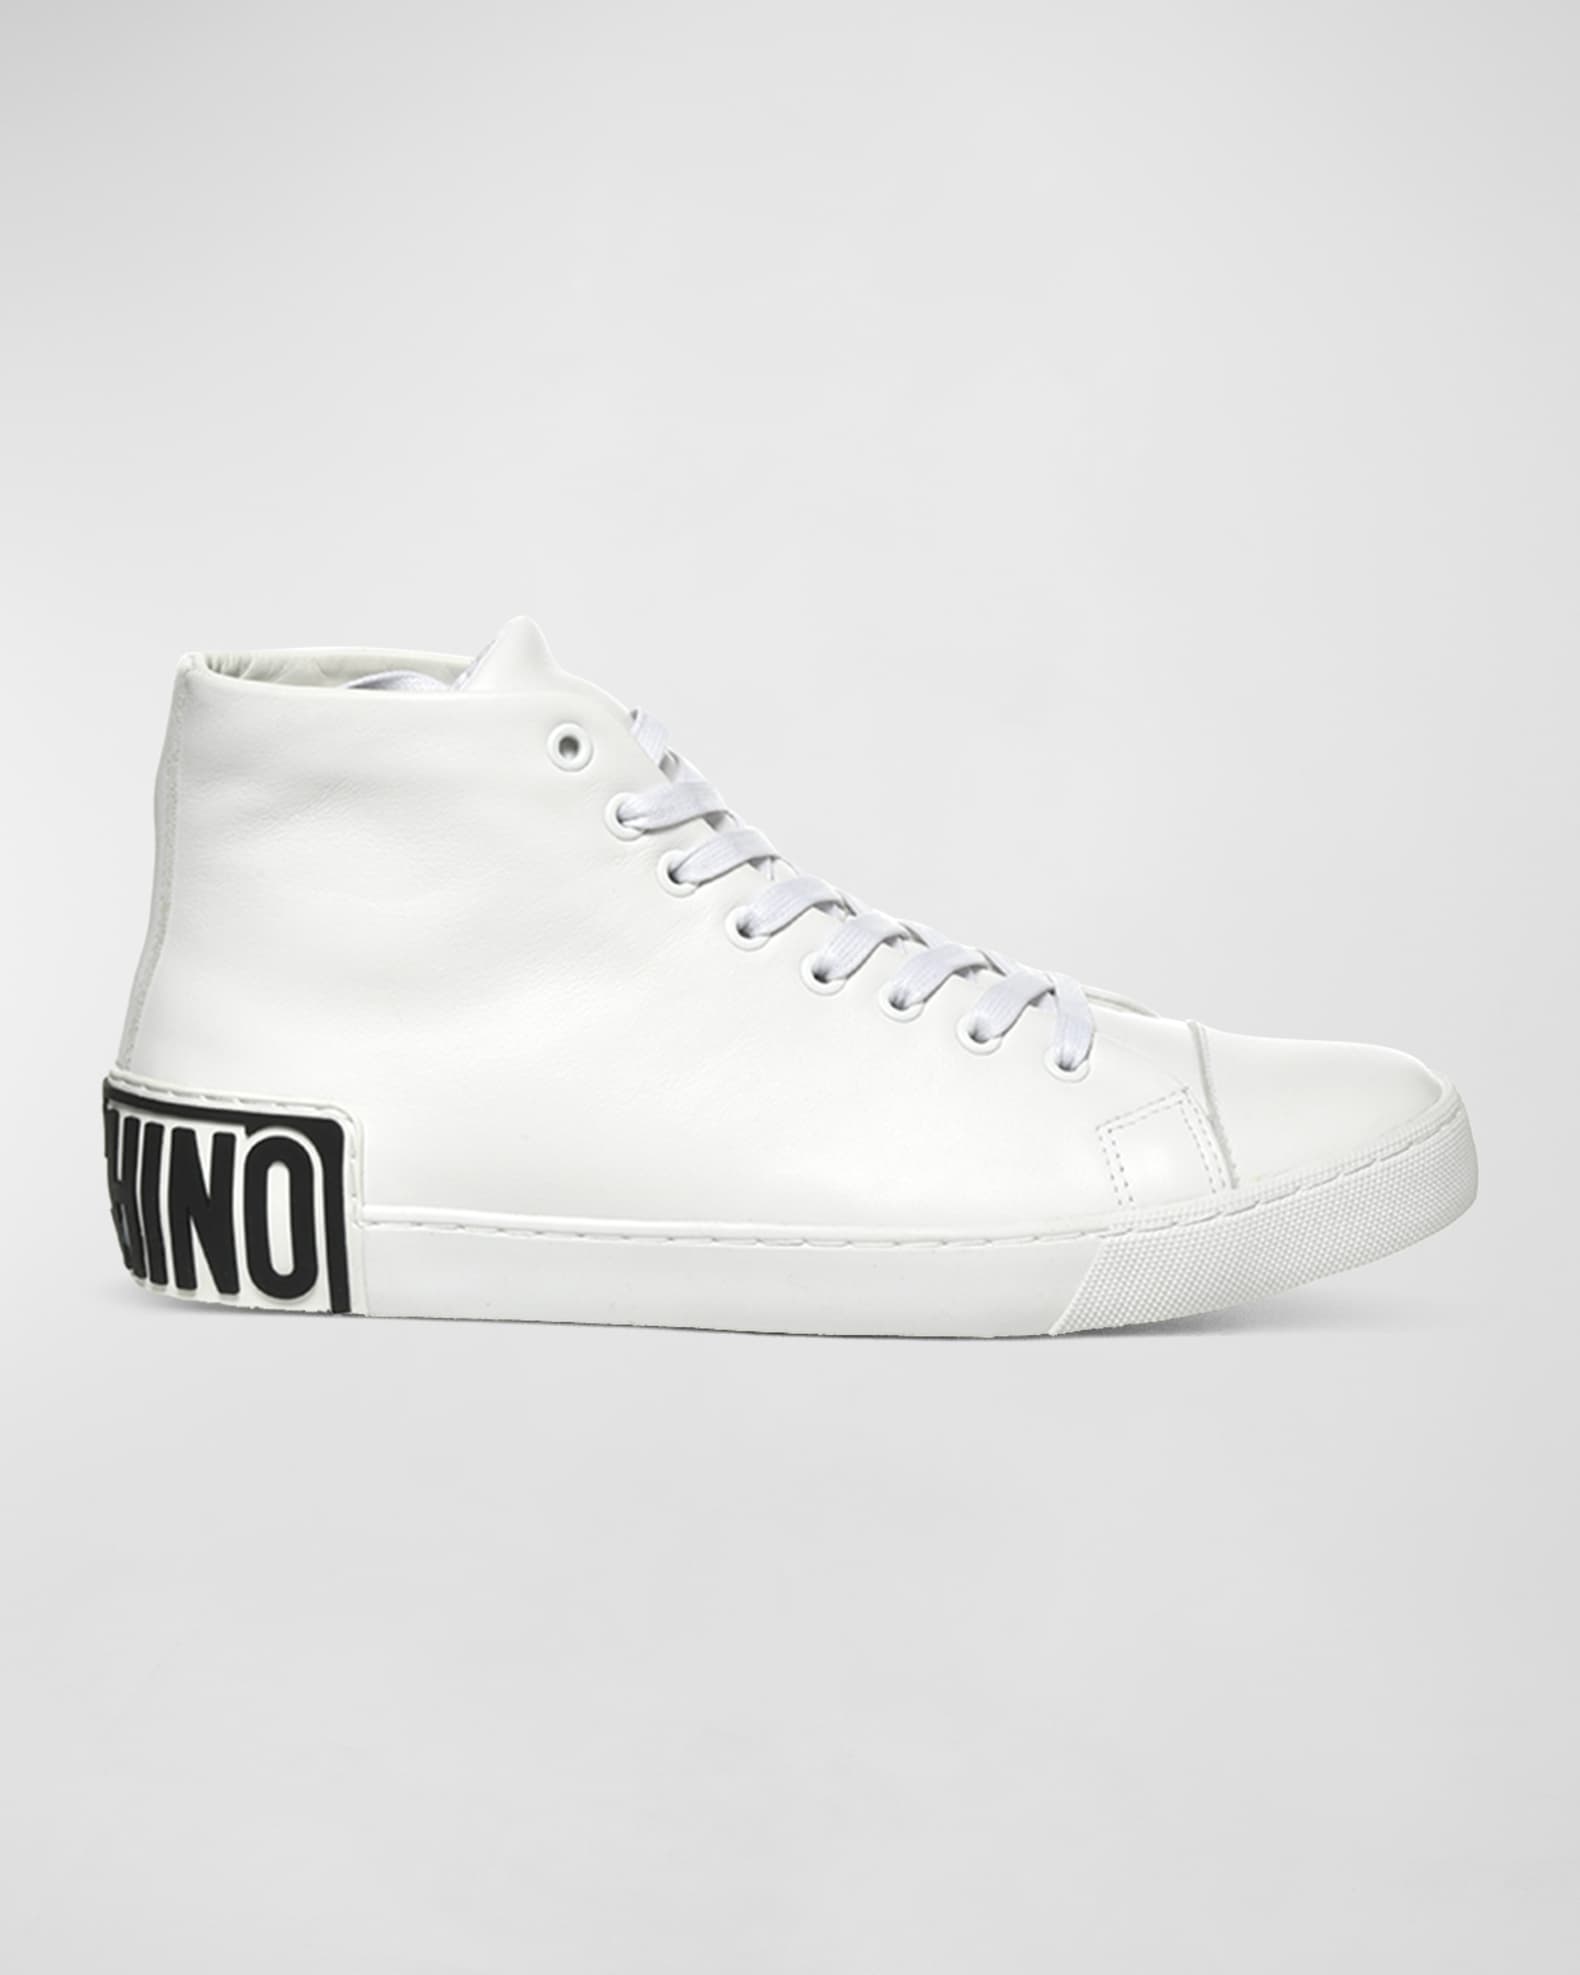 Moschino Kids logo-studded ballerina shoes - White